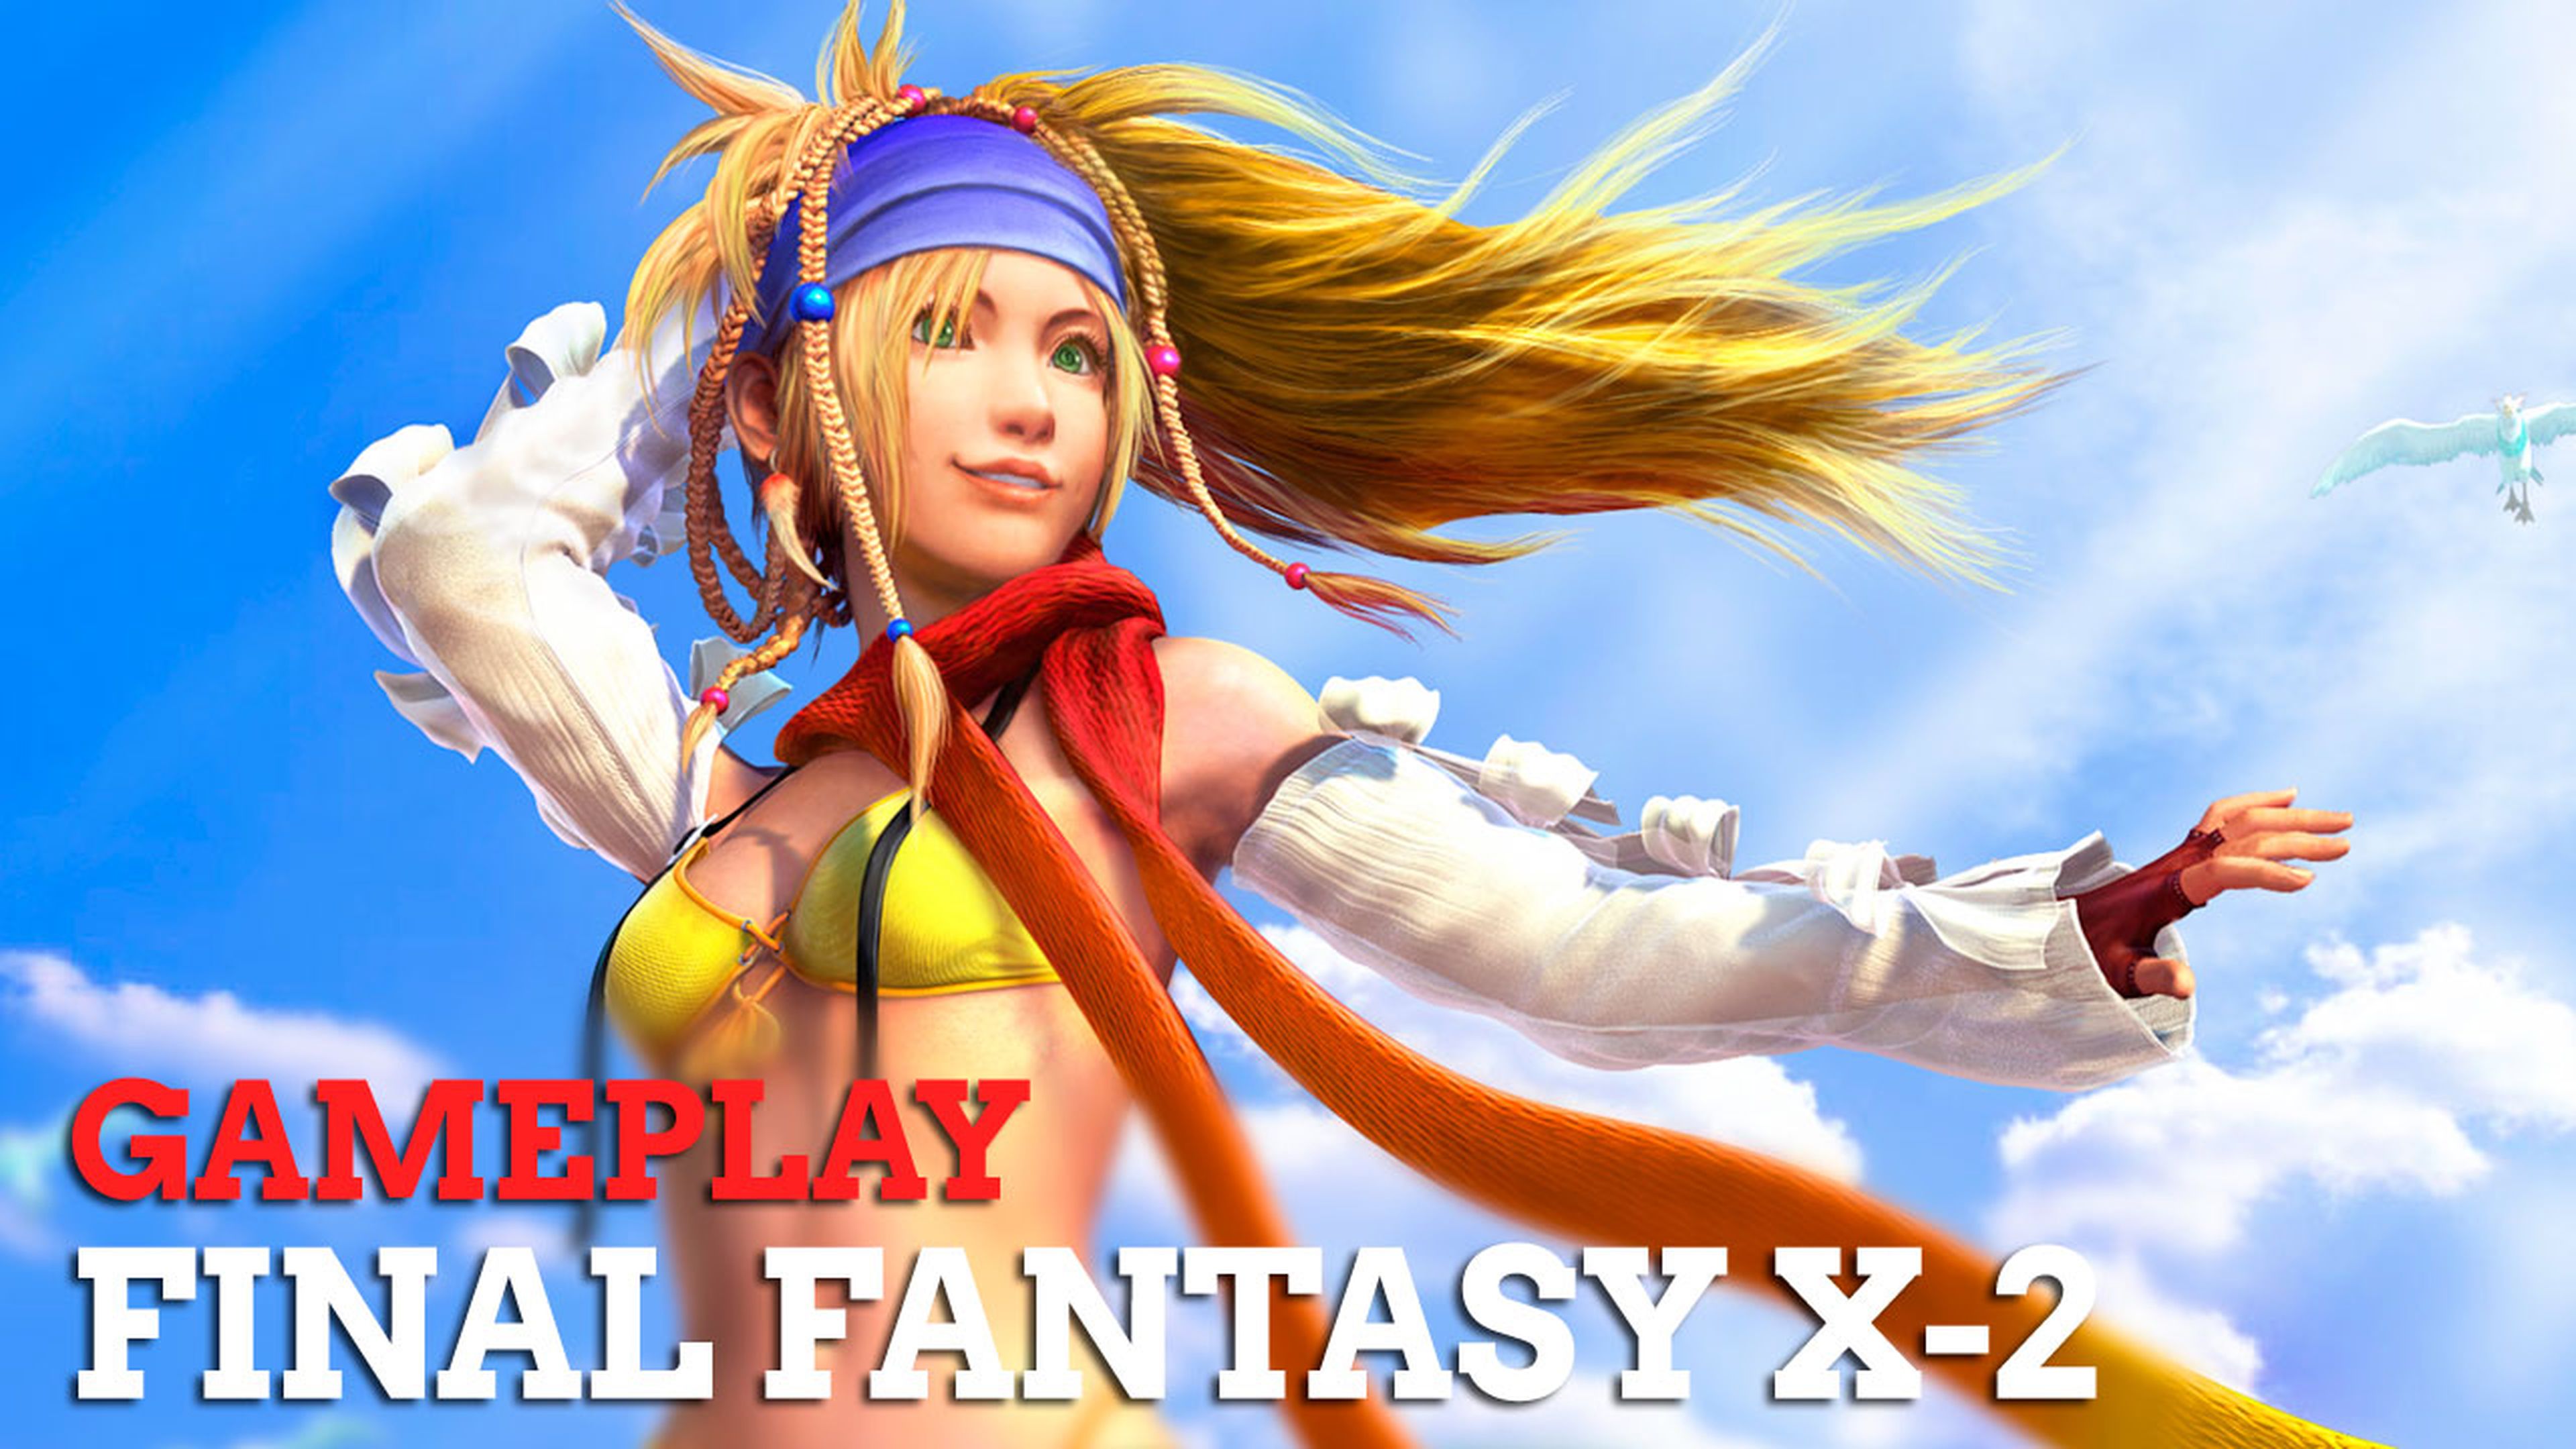 Gameplay Final Fantasy X-2